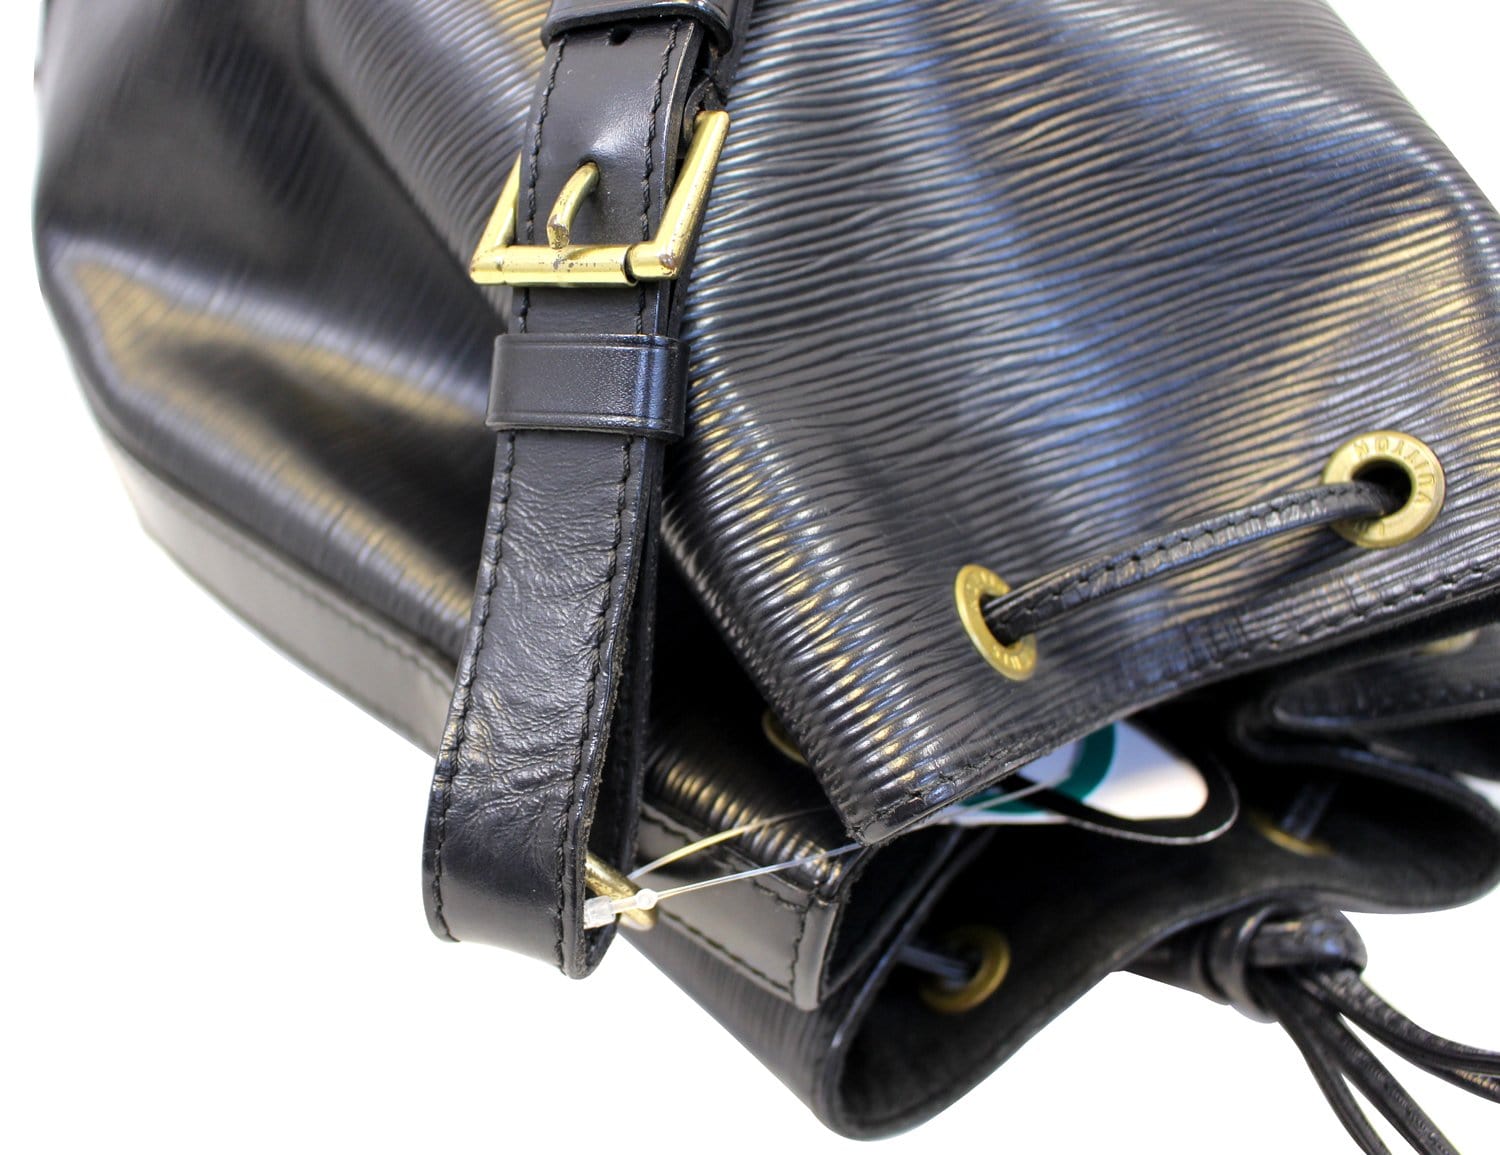 Louis Vuitton Vintage Epi Leather Noe Shoulder Bag - FINAL SALE